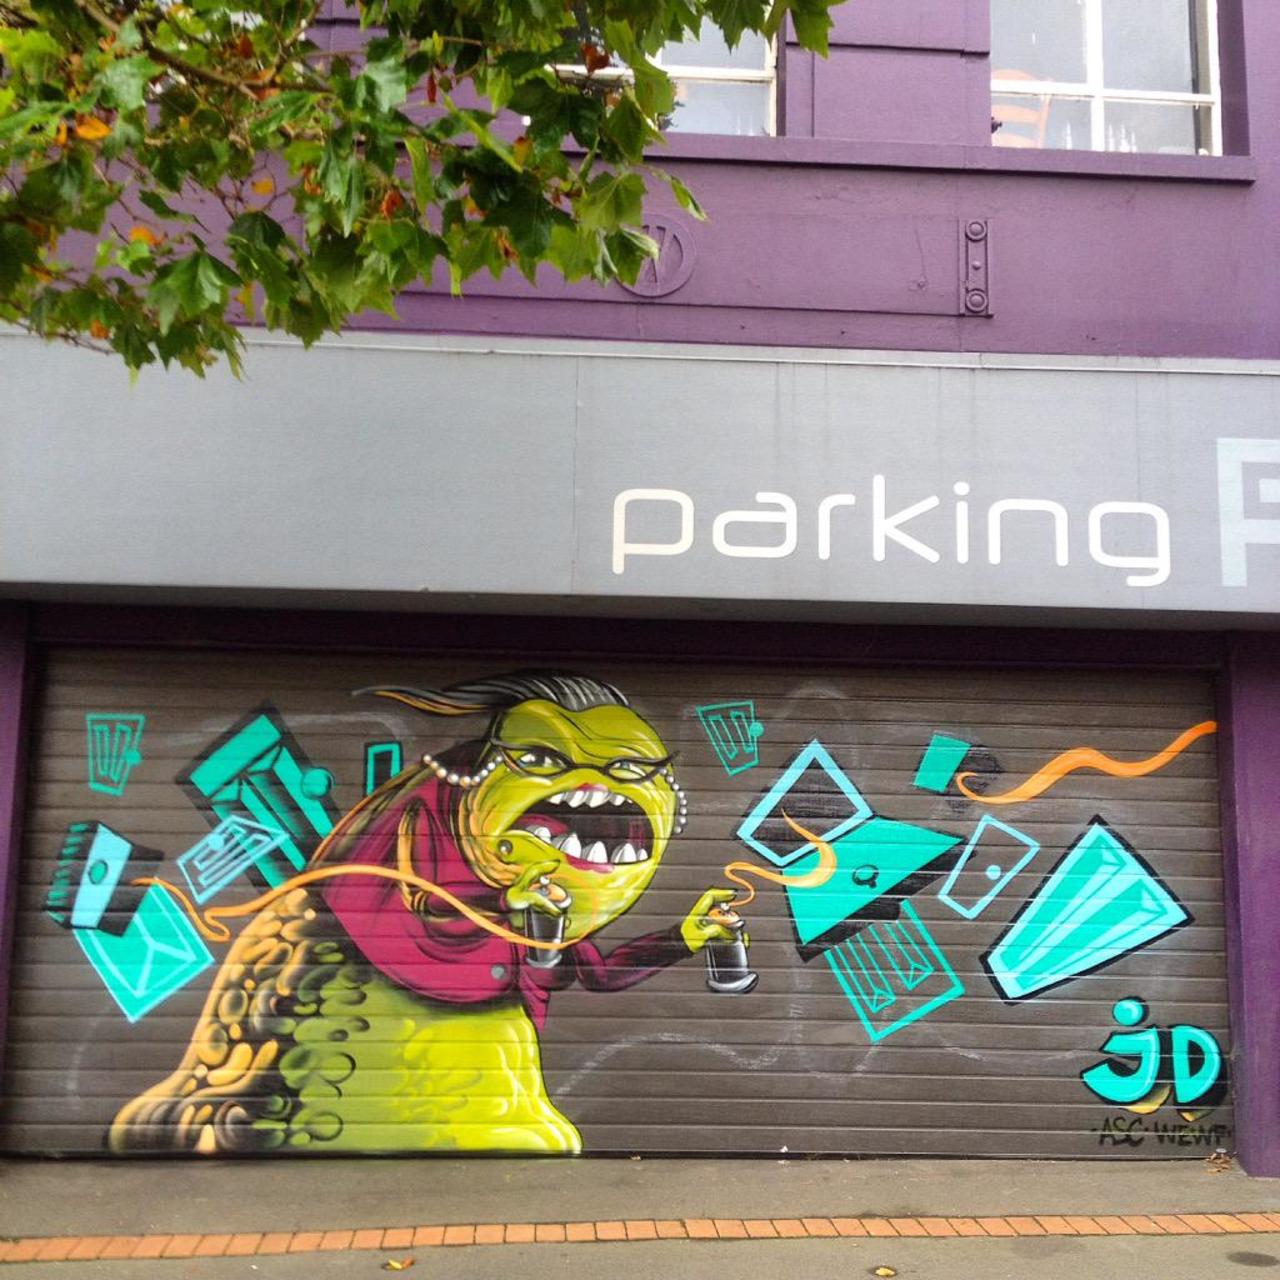 Melbourne artist #jackdouglas giving Dunedin Roz to watch over them #Streetart #graffiti #mural http://t.co/YkRZKWIxv2